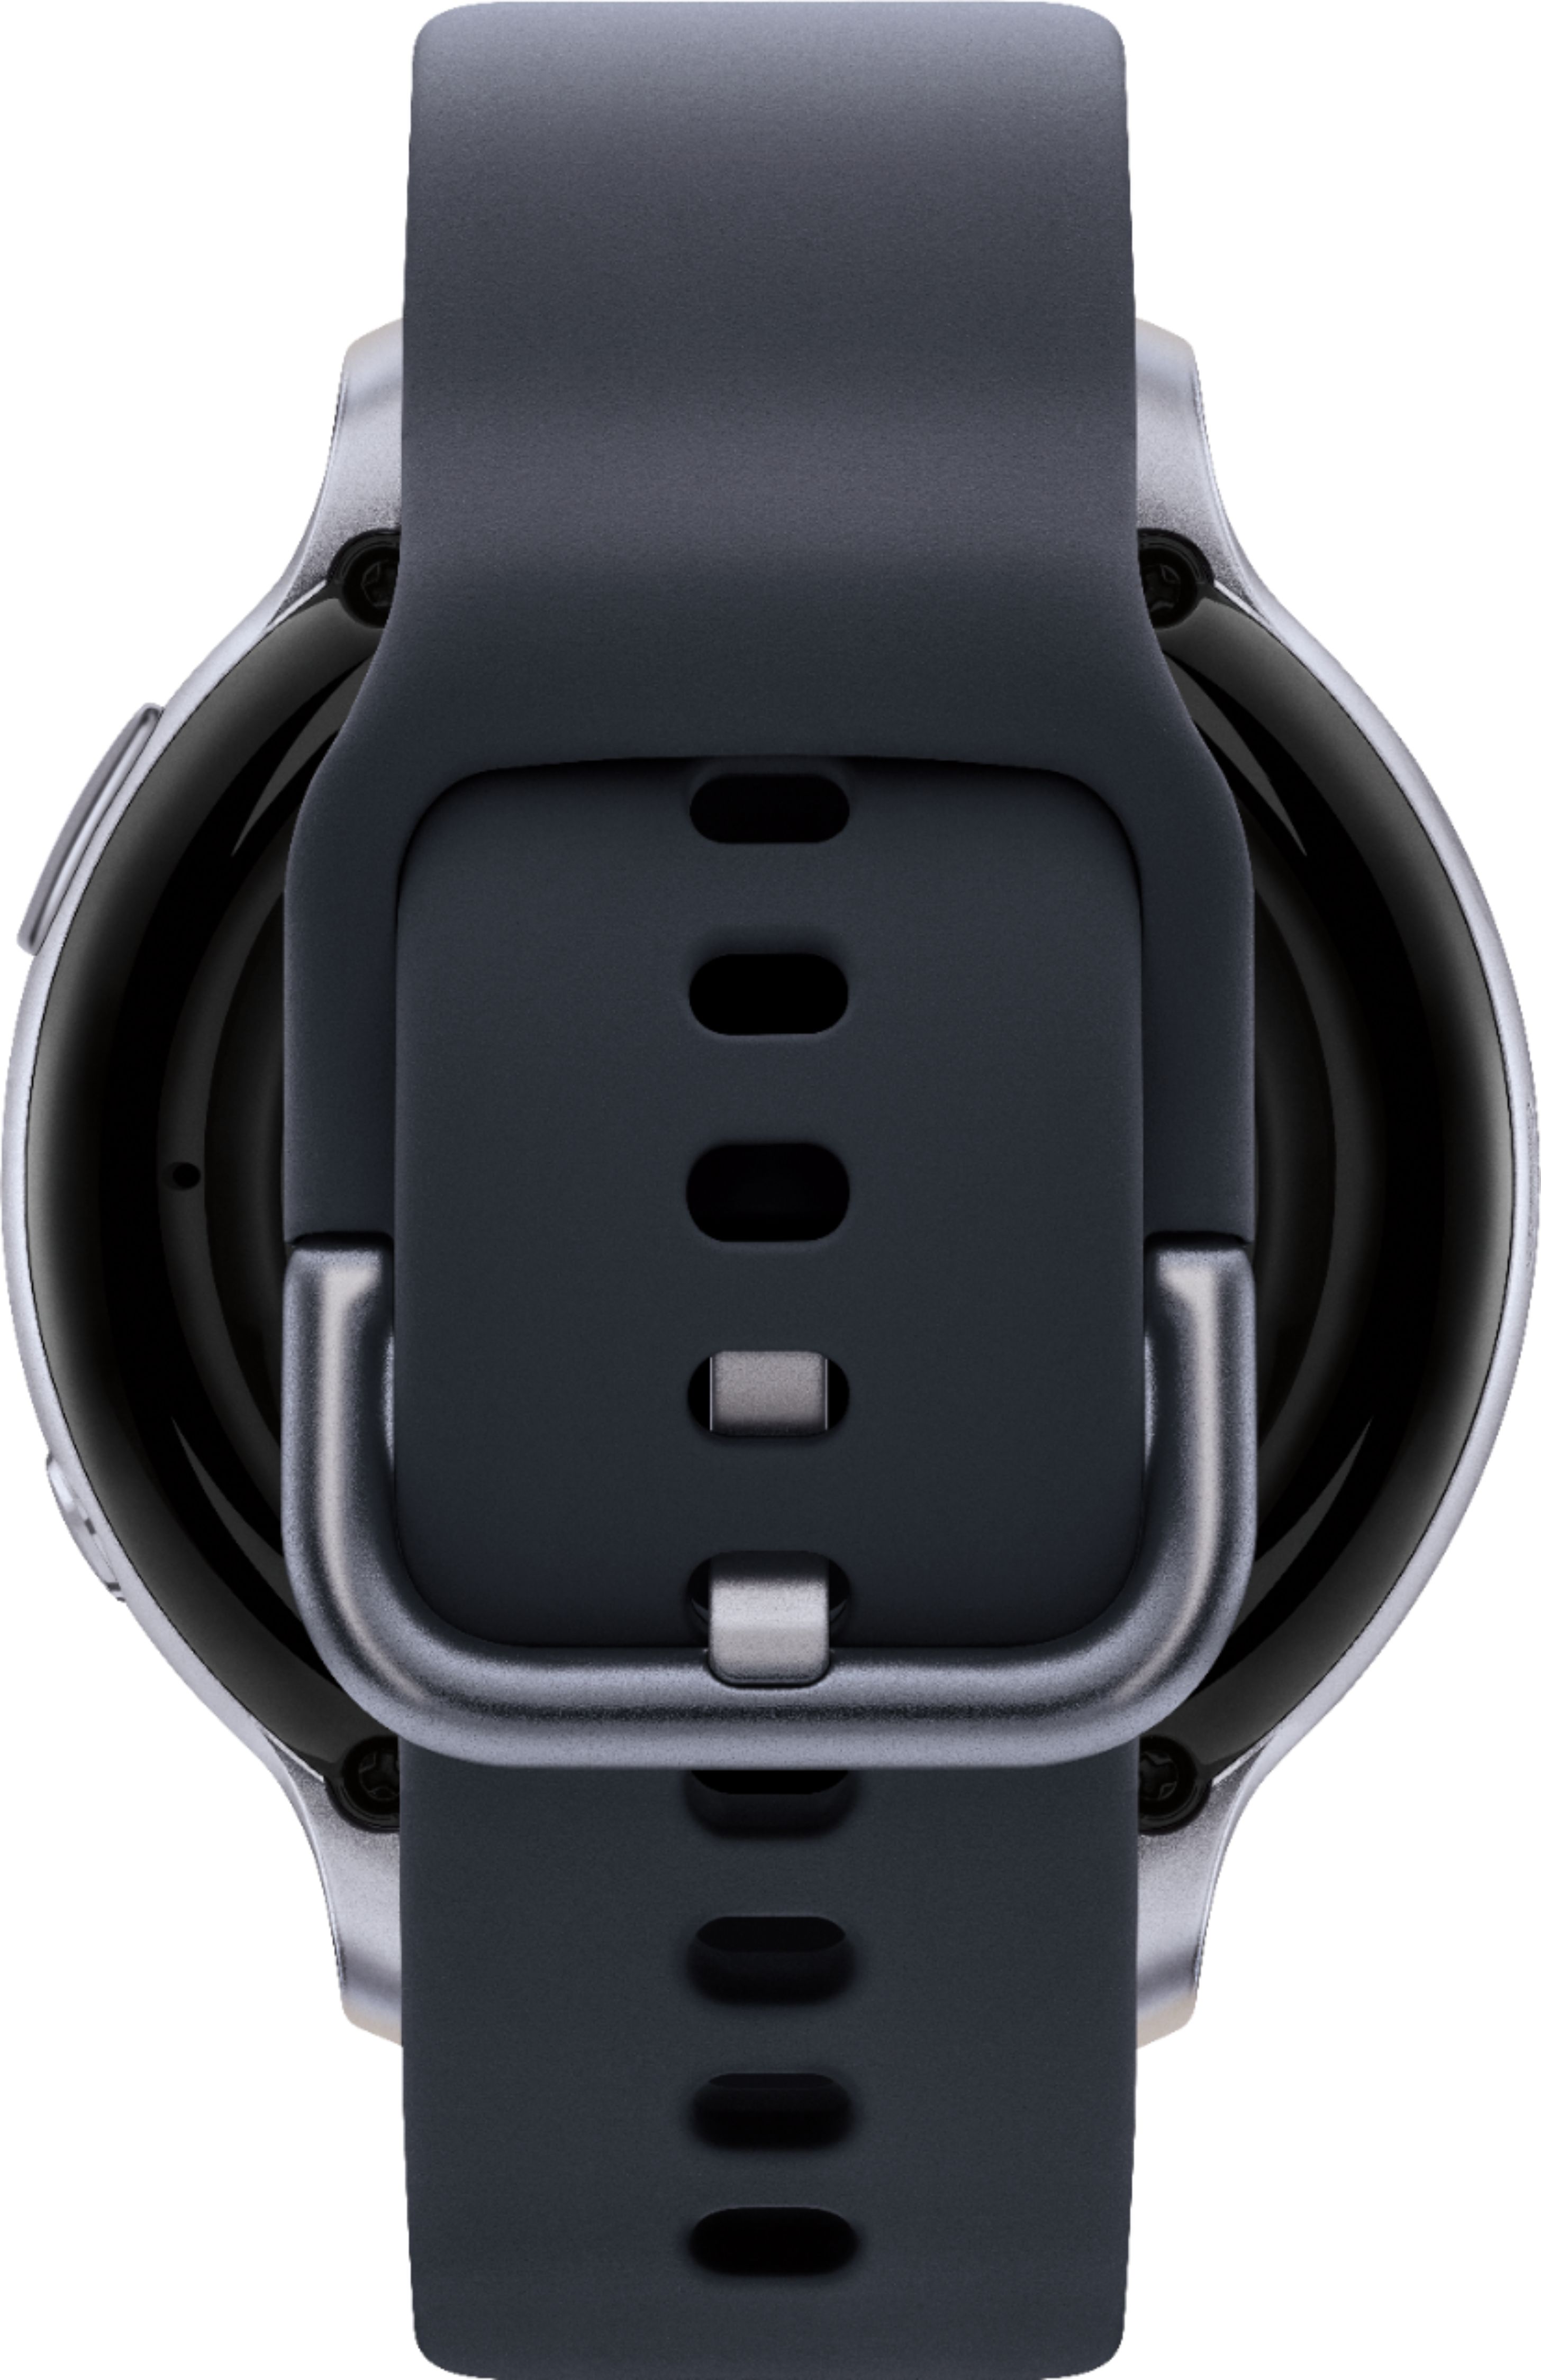 Samsung Galaxy Watch Active 2 (44mm) specs - PhoneArena